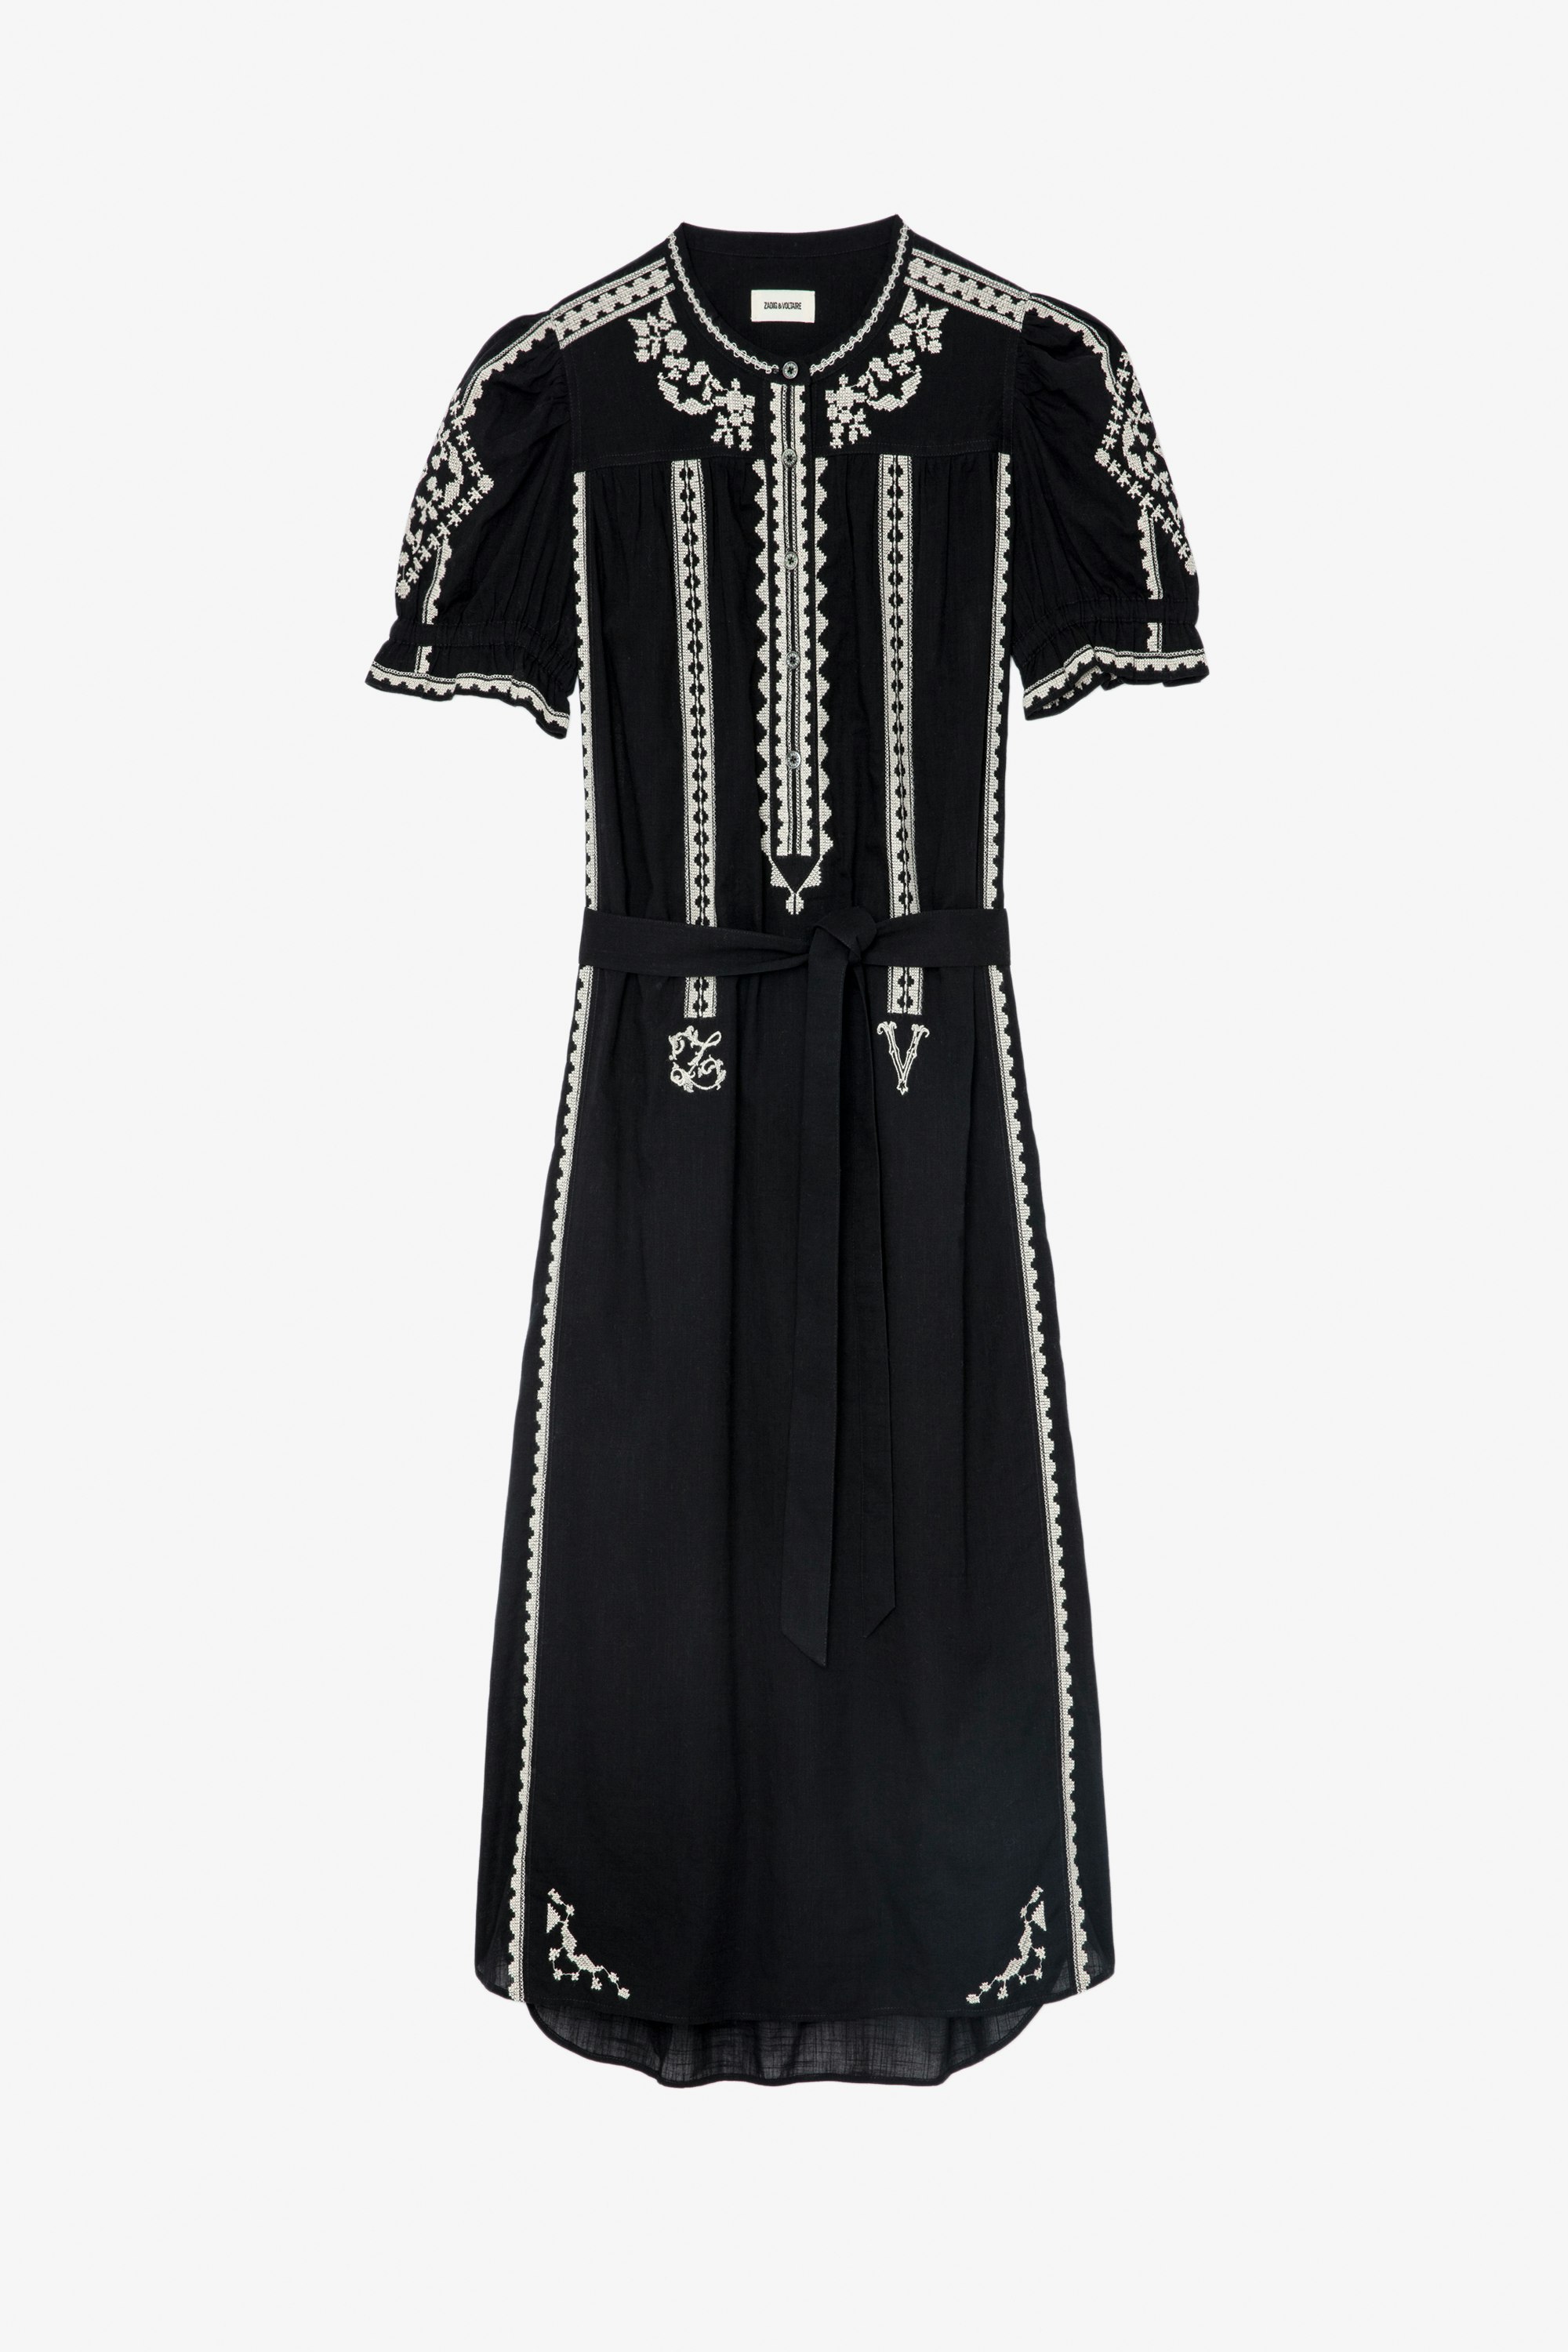 Rigy Dress ブラックコットン 刺繍 バルーンスリーブ、ウエストタイ付きマキシドレス レディース